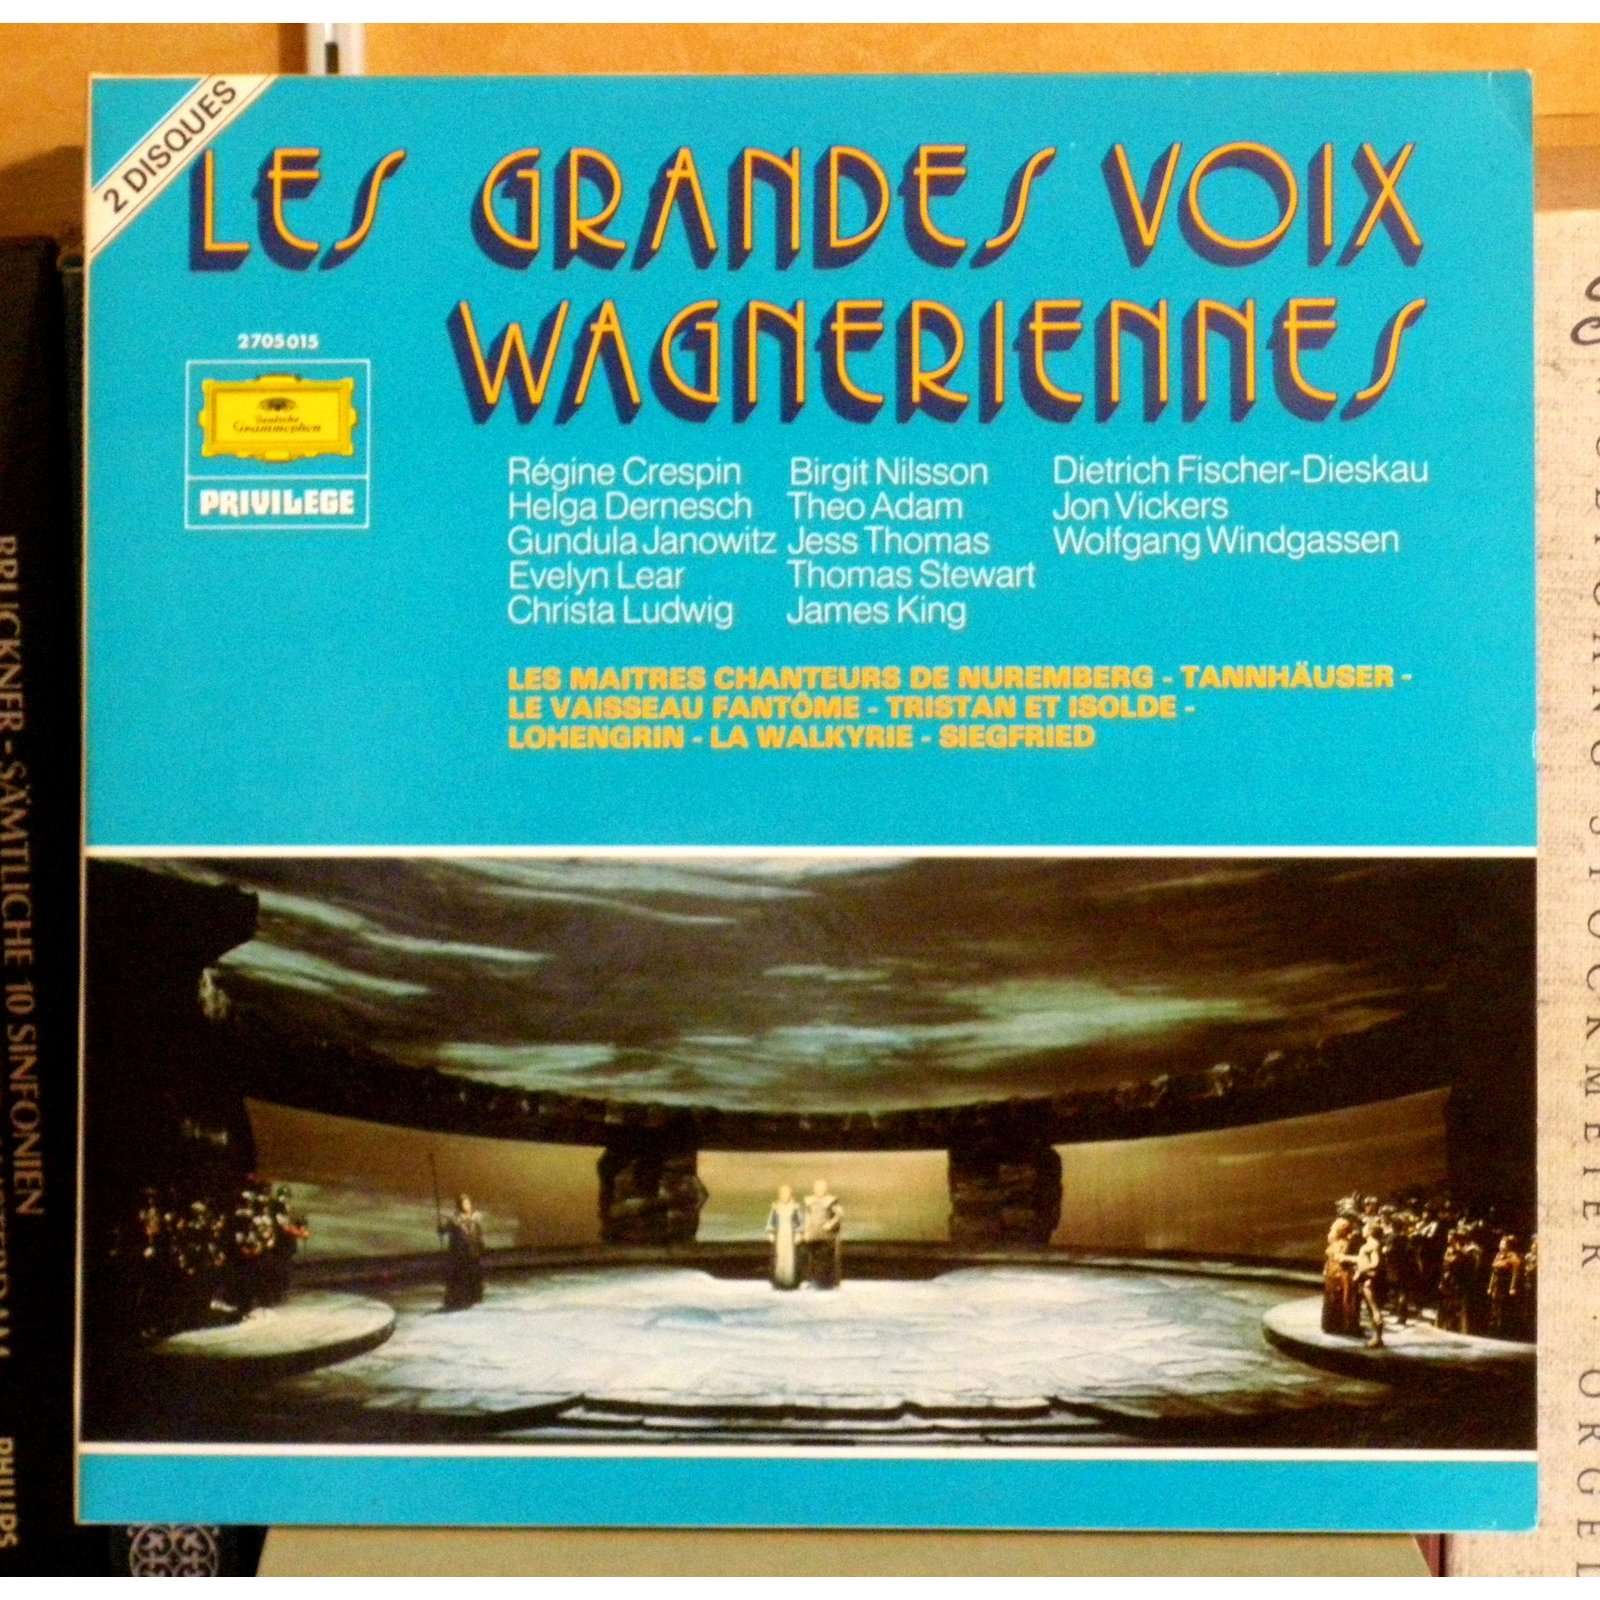 Wagner Les Grandes Voix